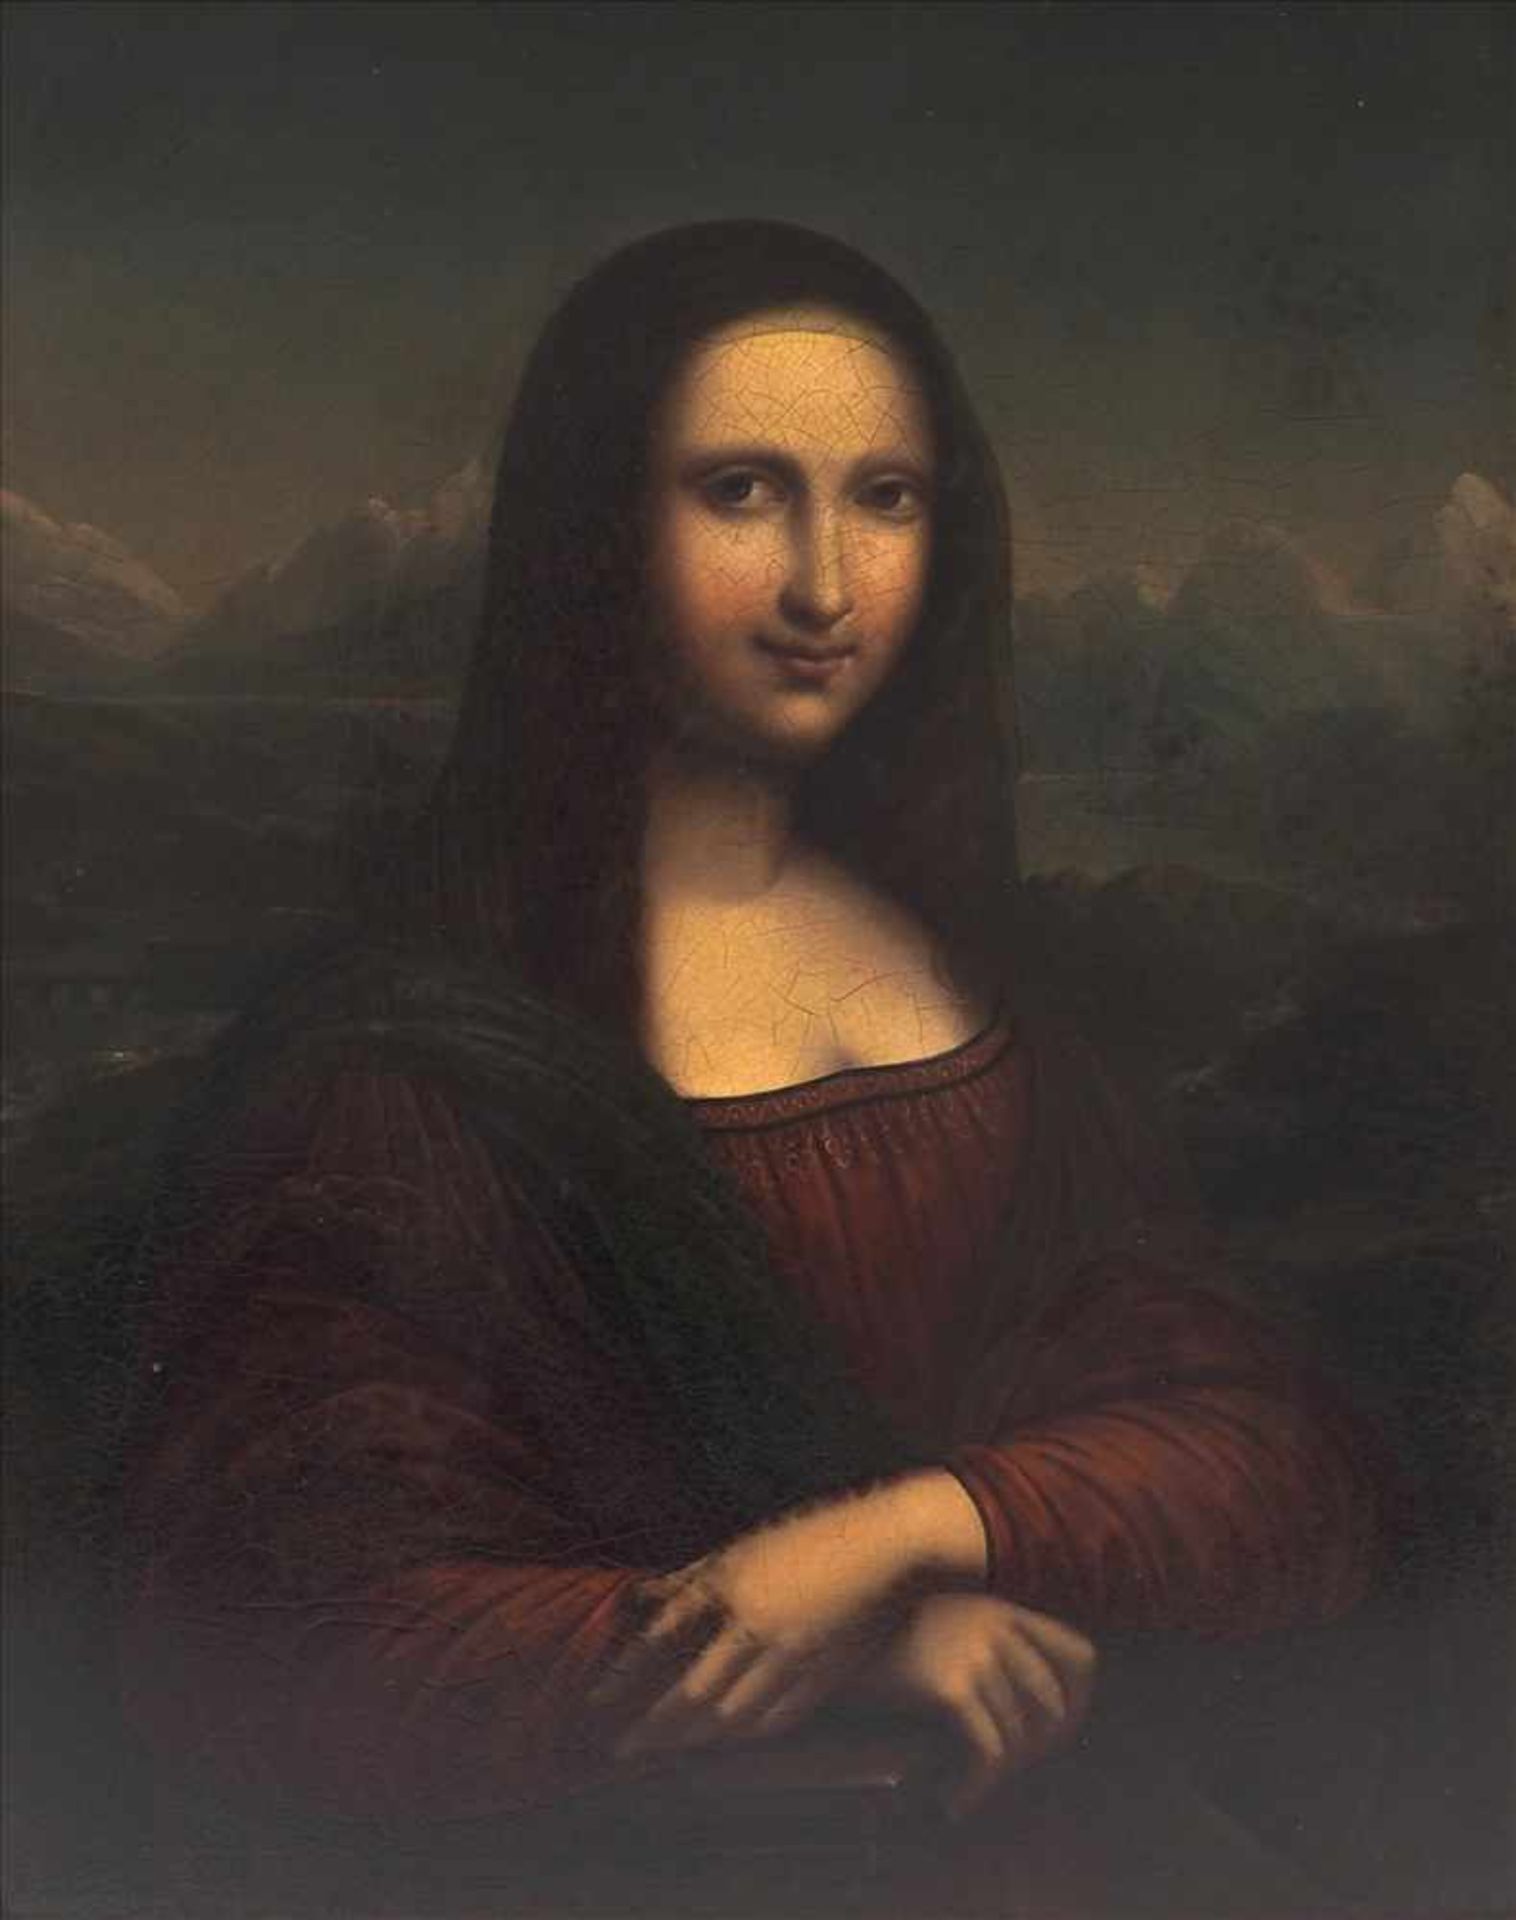 Da Vinci, LeonardoKopie nach. Mona Lisa. Öldruck auf Metallplatte. Größe ca. 36 x 28,5 cm, Rahmen